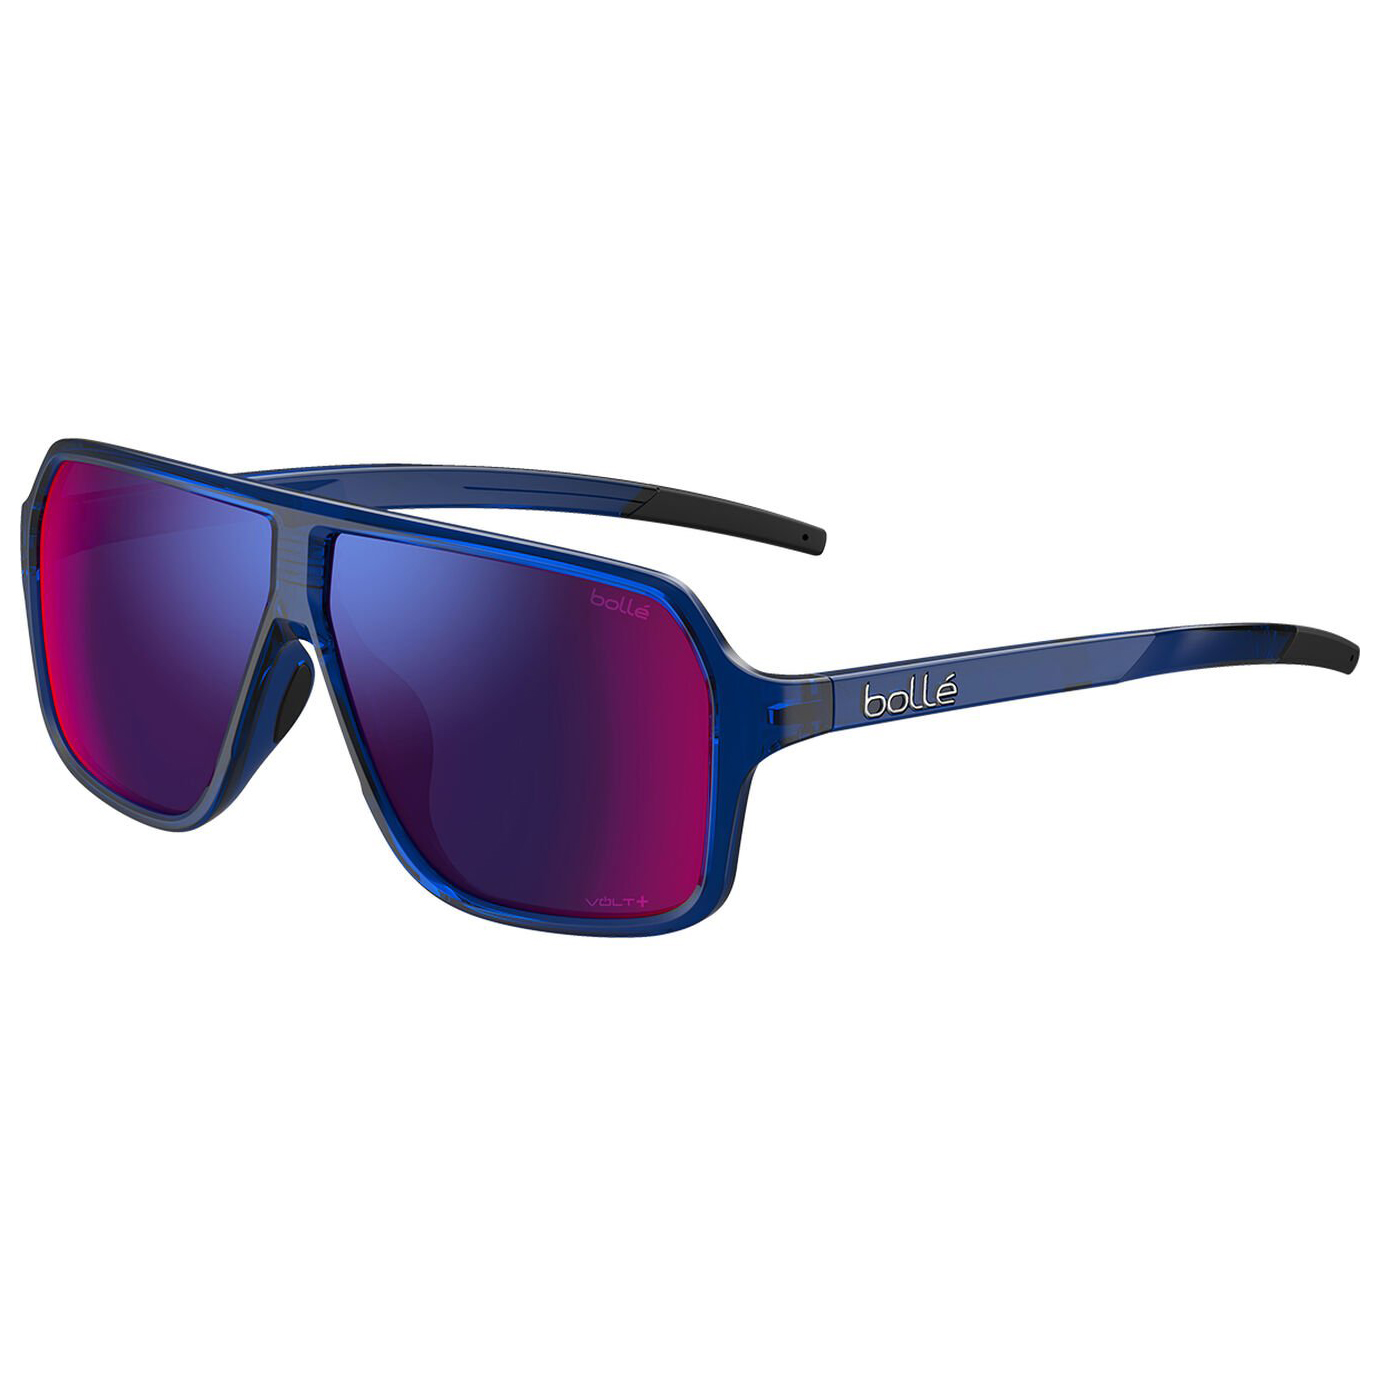 Солнцезащитные очки Bollé Prime Polarized S3 (VLT 16%), цвет Navy Crystal Shiny очки солнцезащитные stylemark polarized l1454a